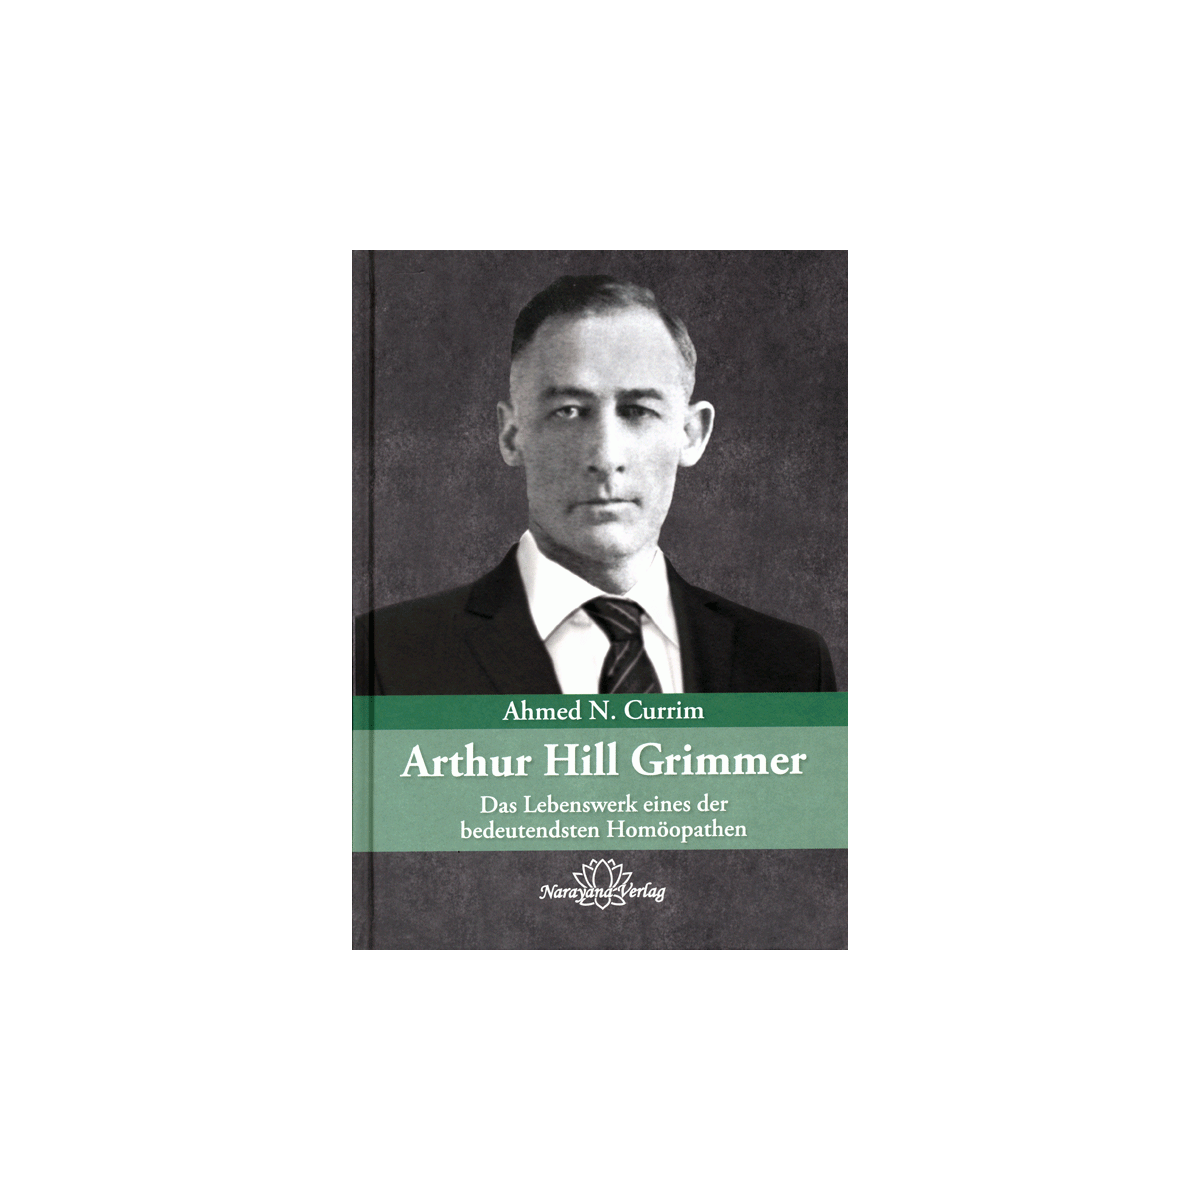 Ahmed N. Currim, Arthur Hill Grimmer